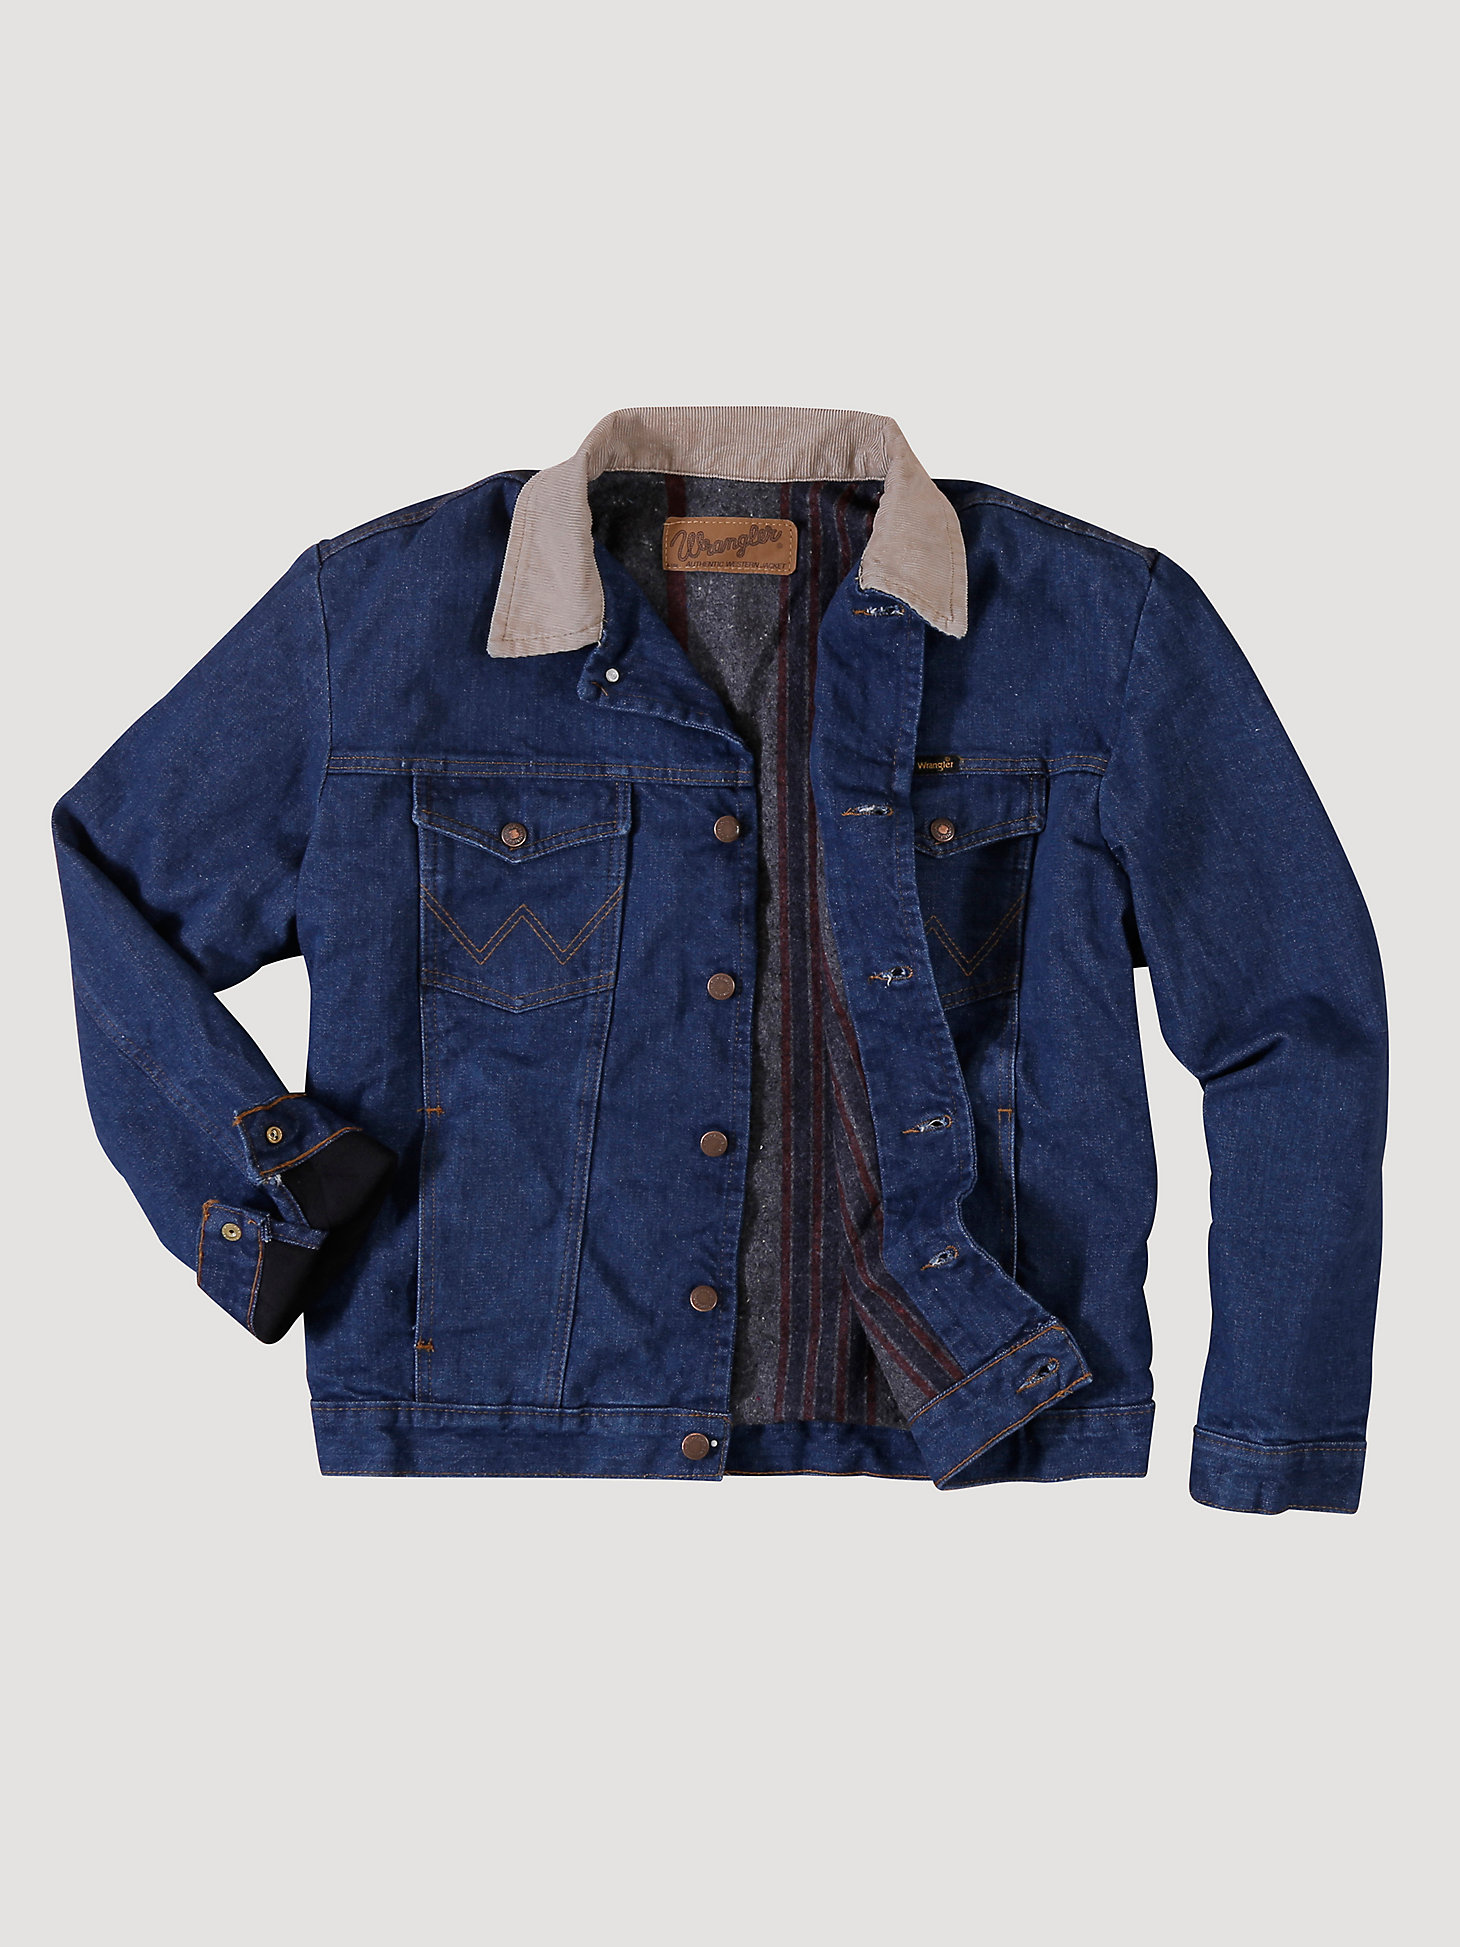 Men's Wrangler® Blanket Lined Corduroy Collar Denim Jacket in Prewashed Indigo alternative view 5